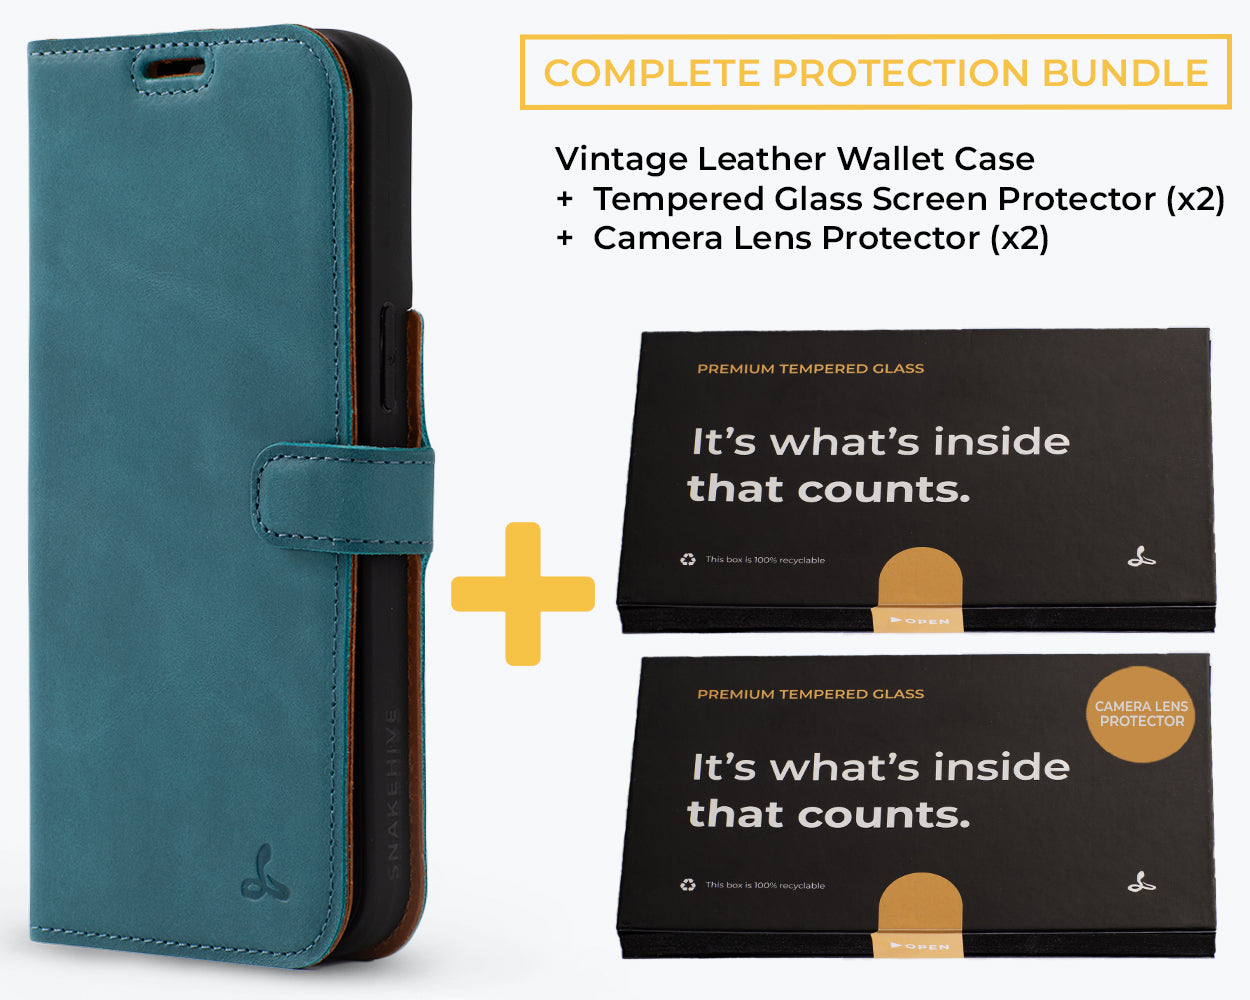 Complete Protection Bundle (Vintage Wallet) - Apple iPhone 11 Pro Max